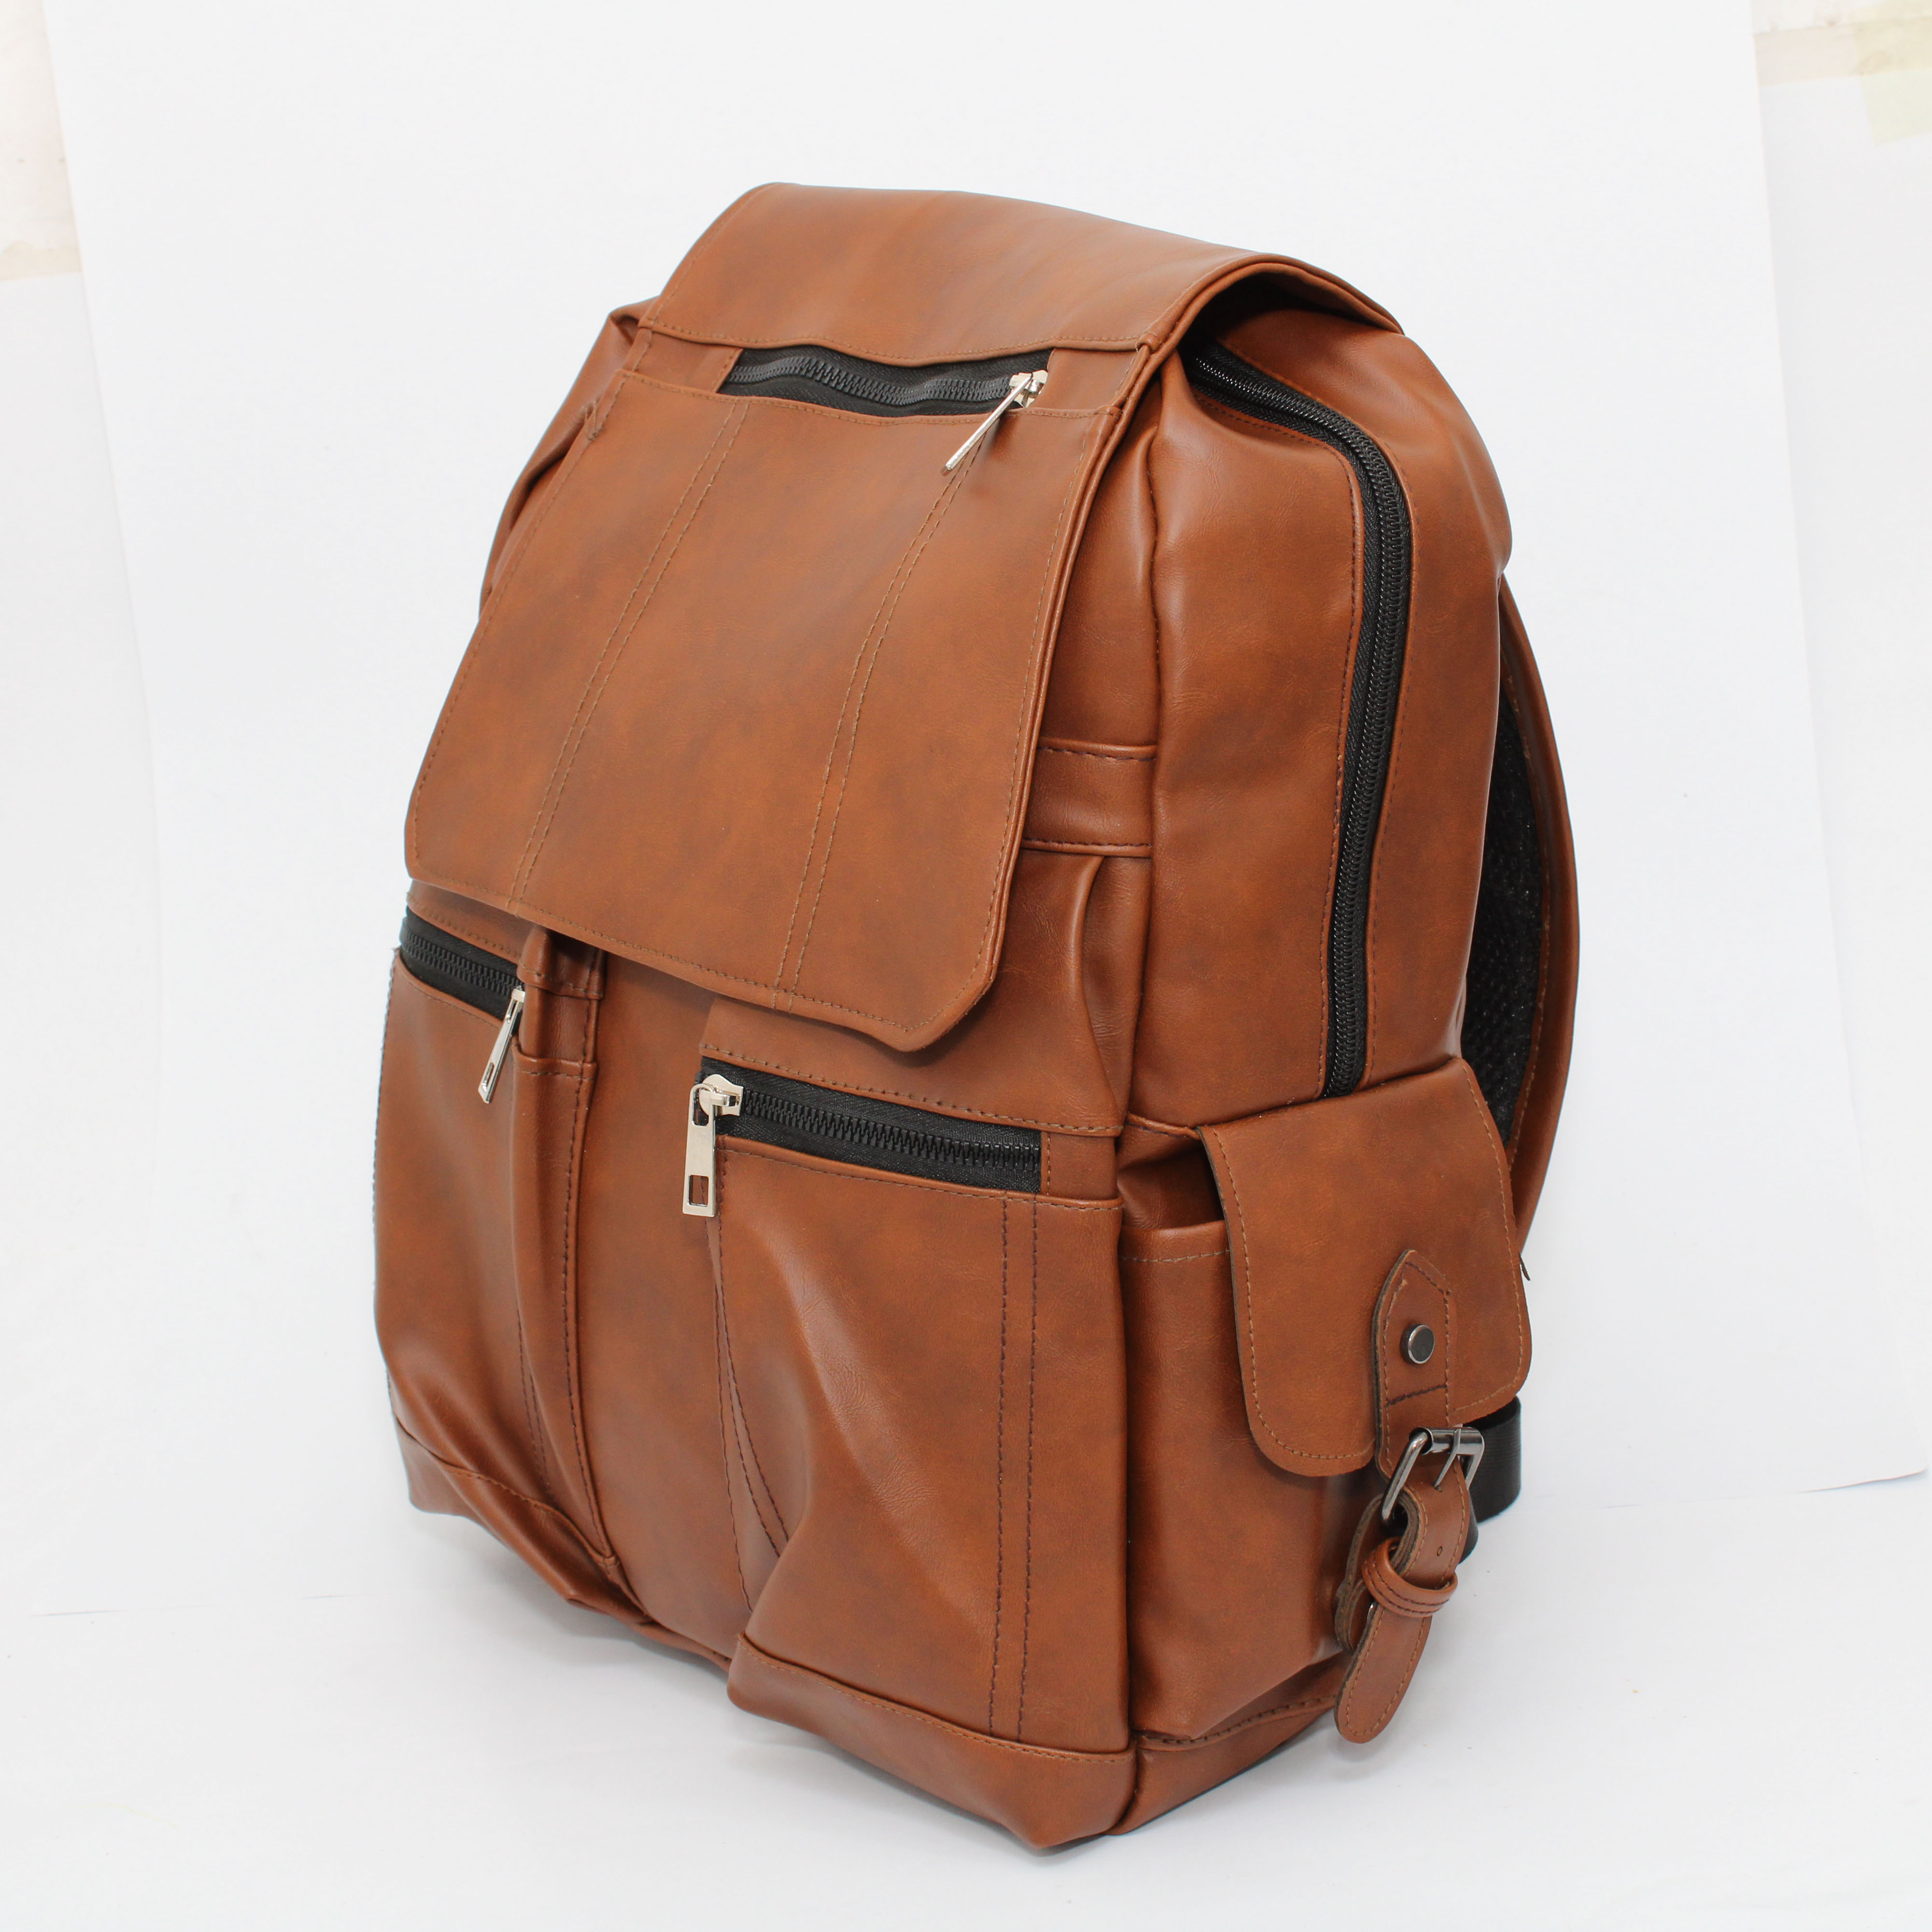 Brown Leather School College Laptop Backpack Bookbag for Men Women